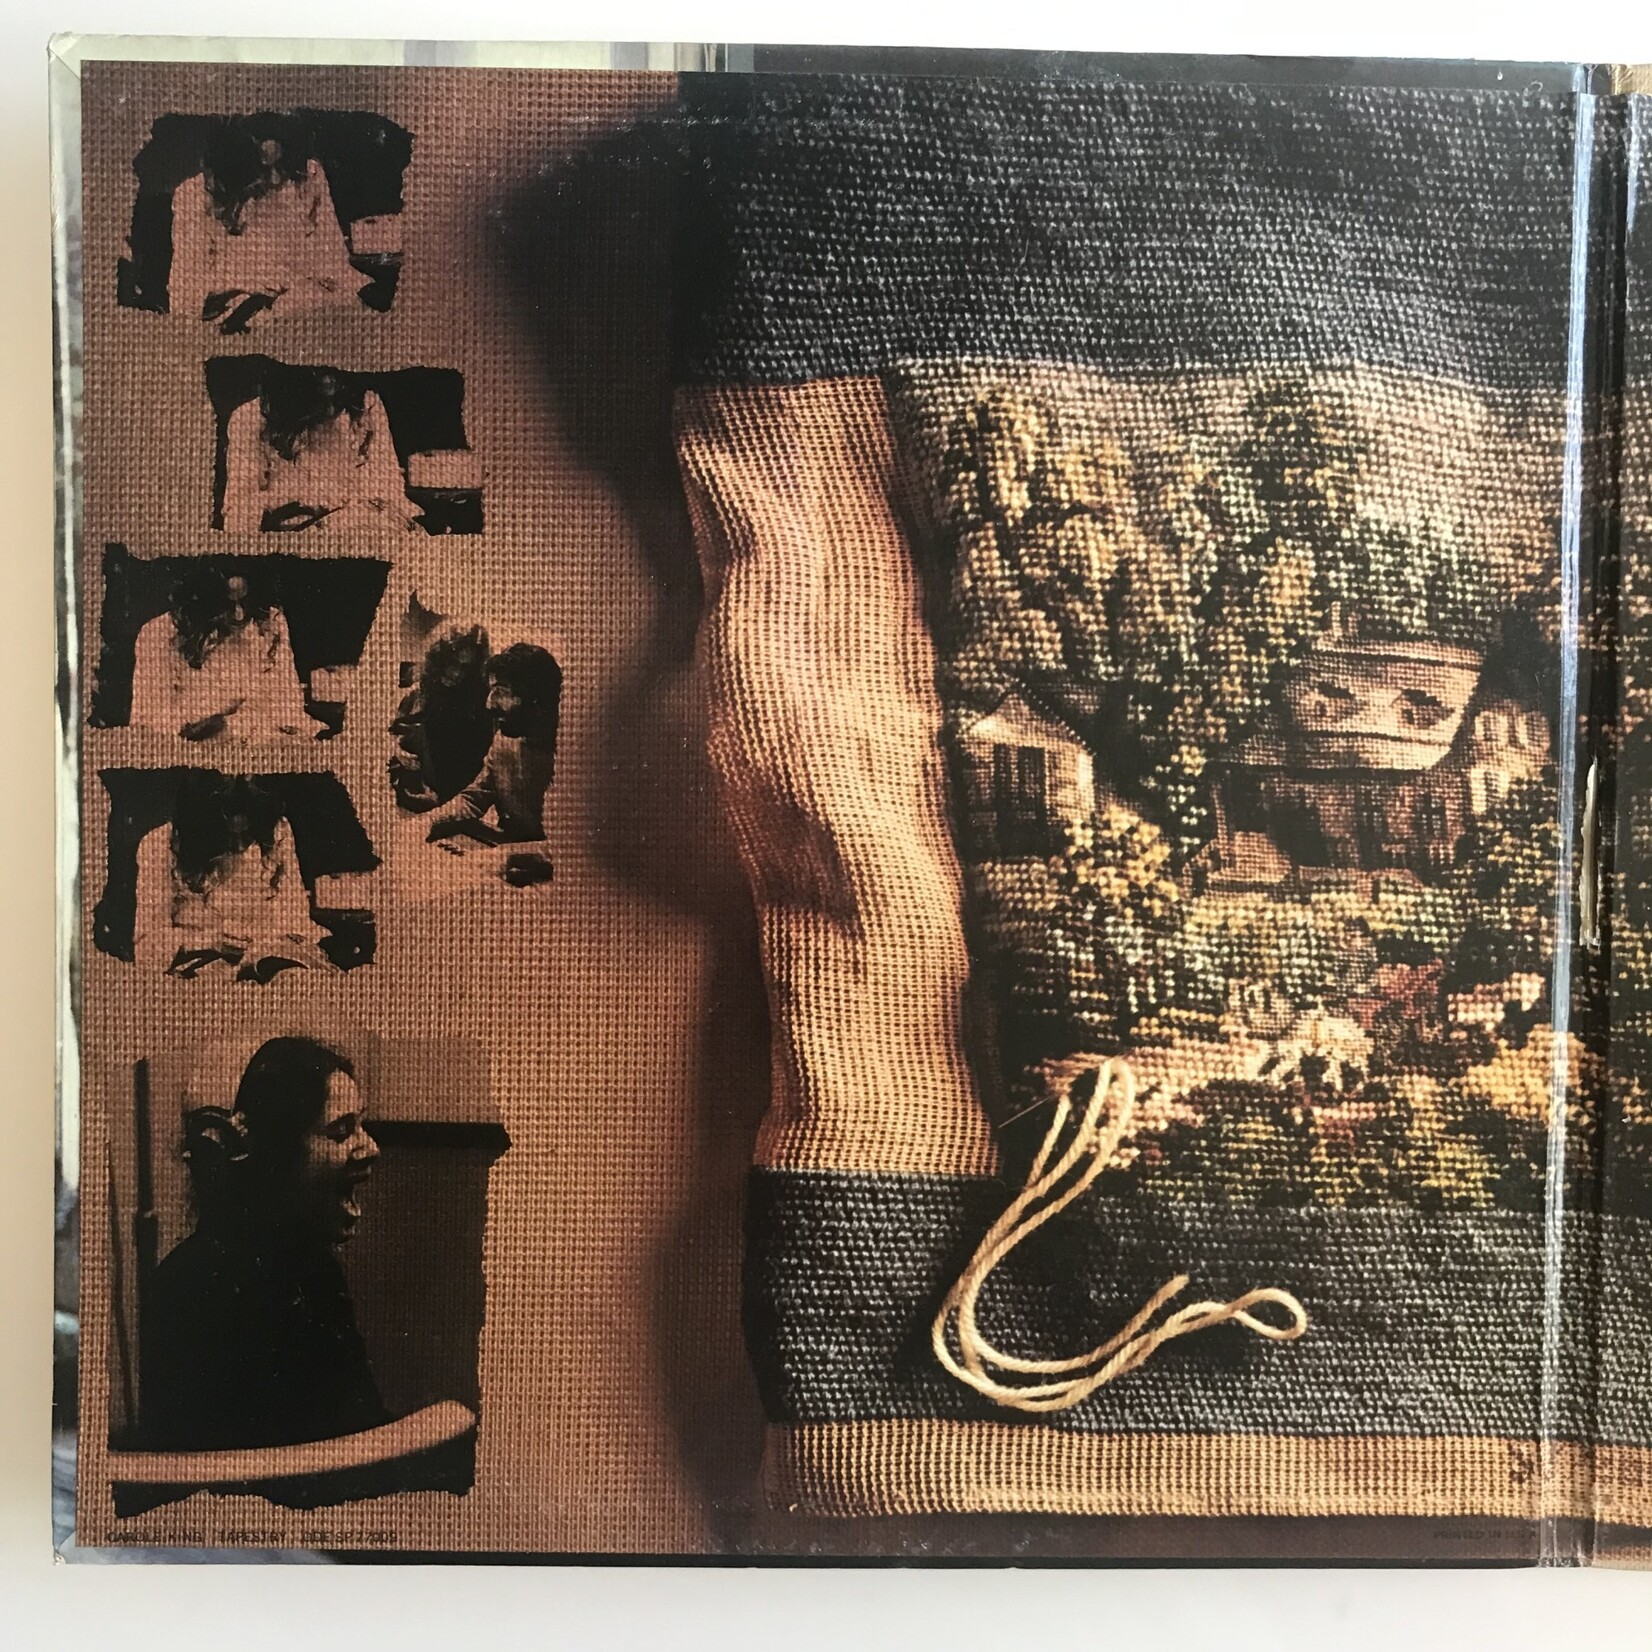 Carole King - Tapestry - ODE SP 77009 - Vinyl LP (USED)